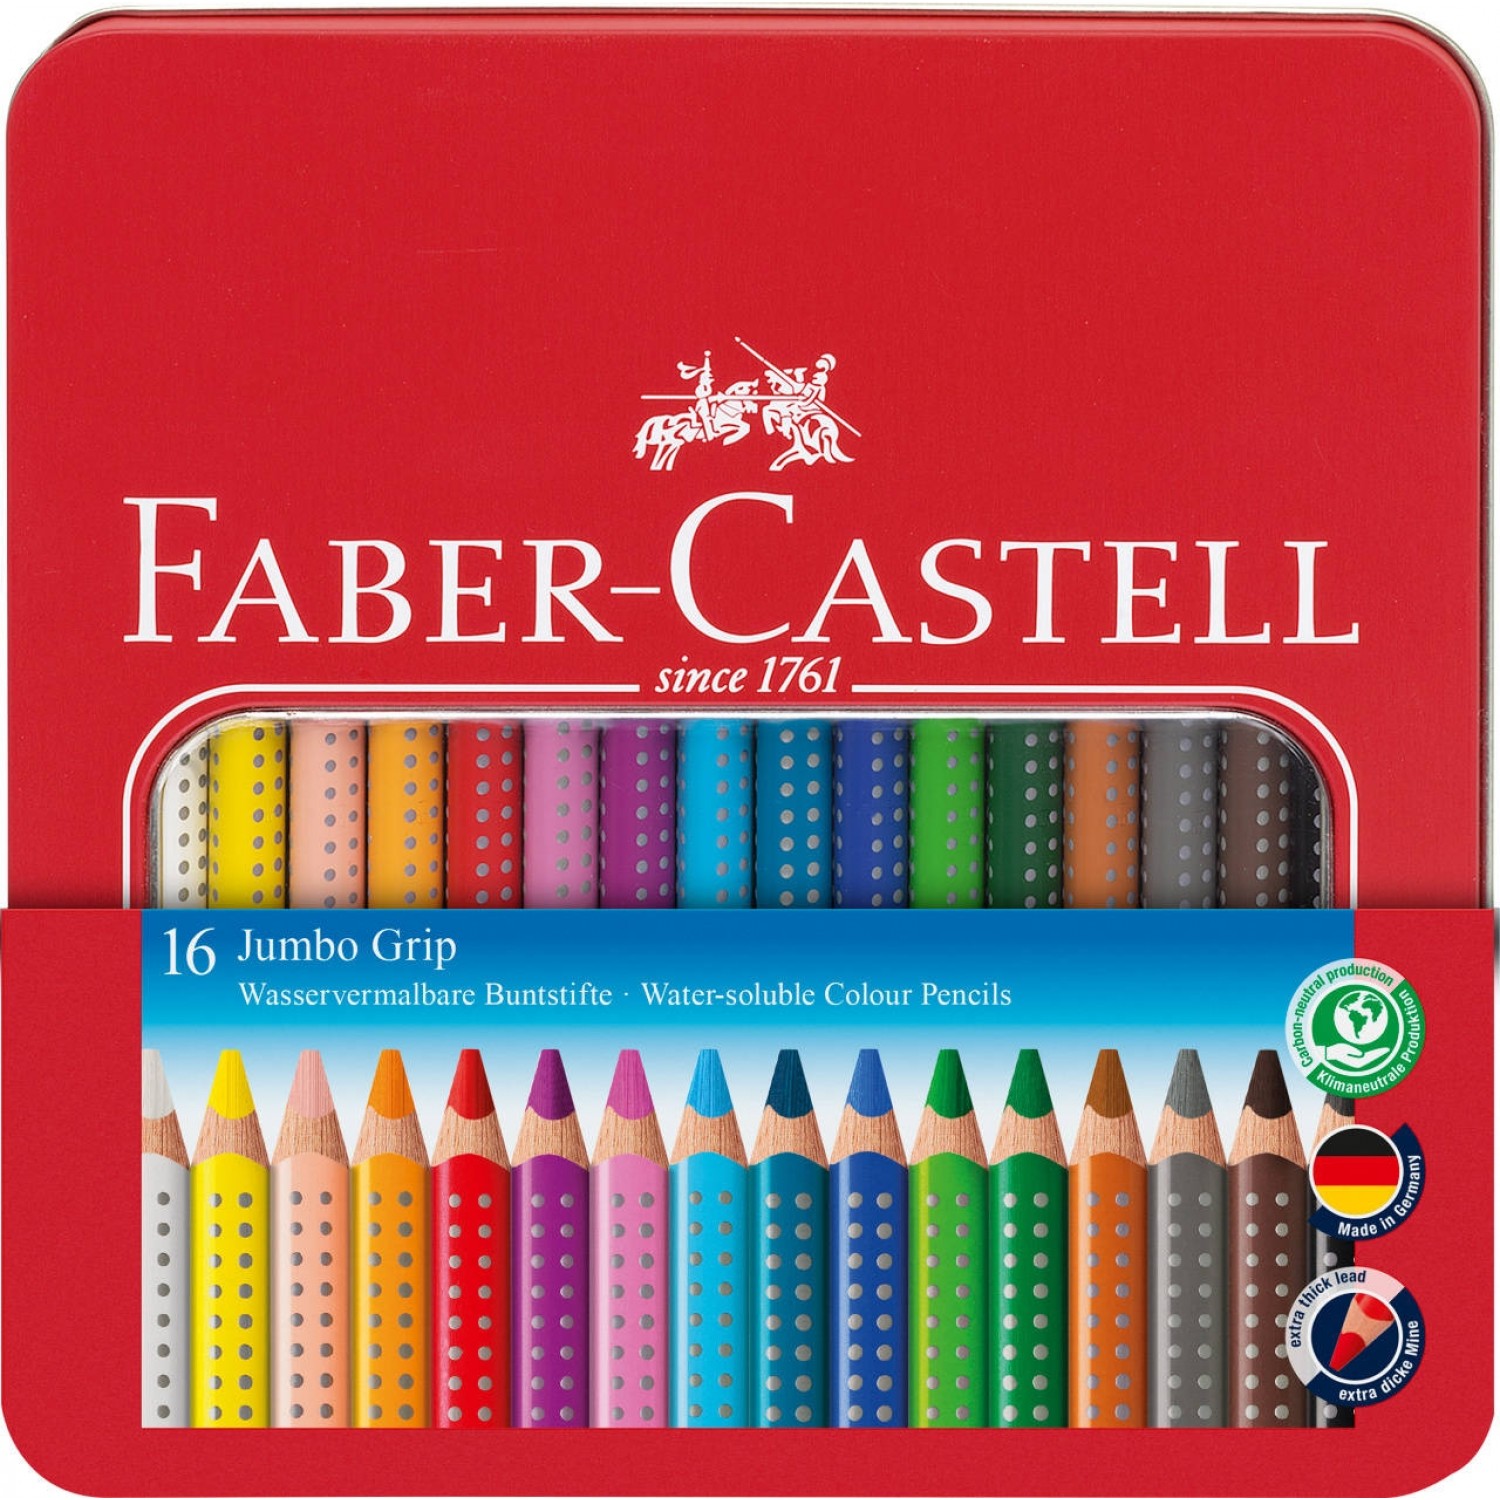 Faber-Castell Jumbo Grip Crayon 16 pcs. metall case